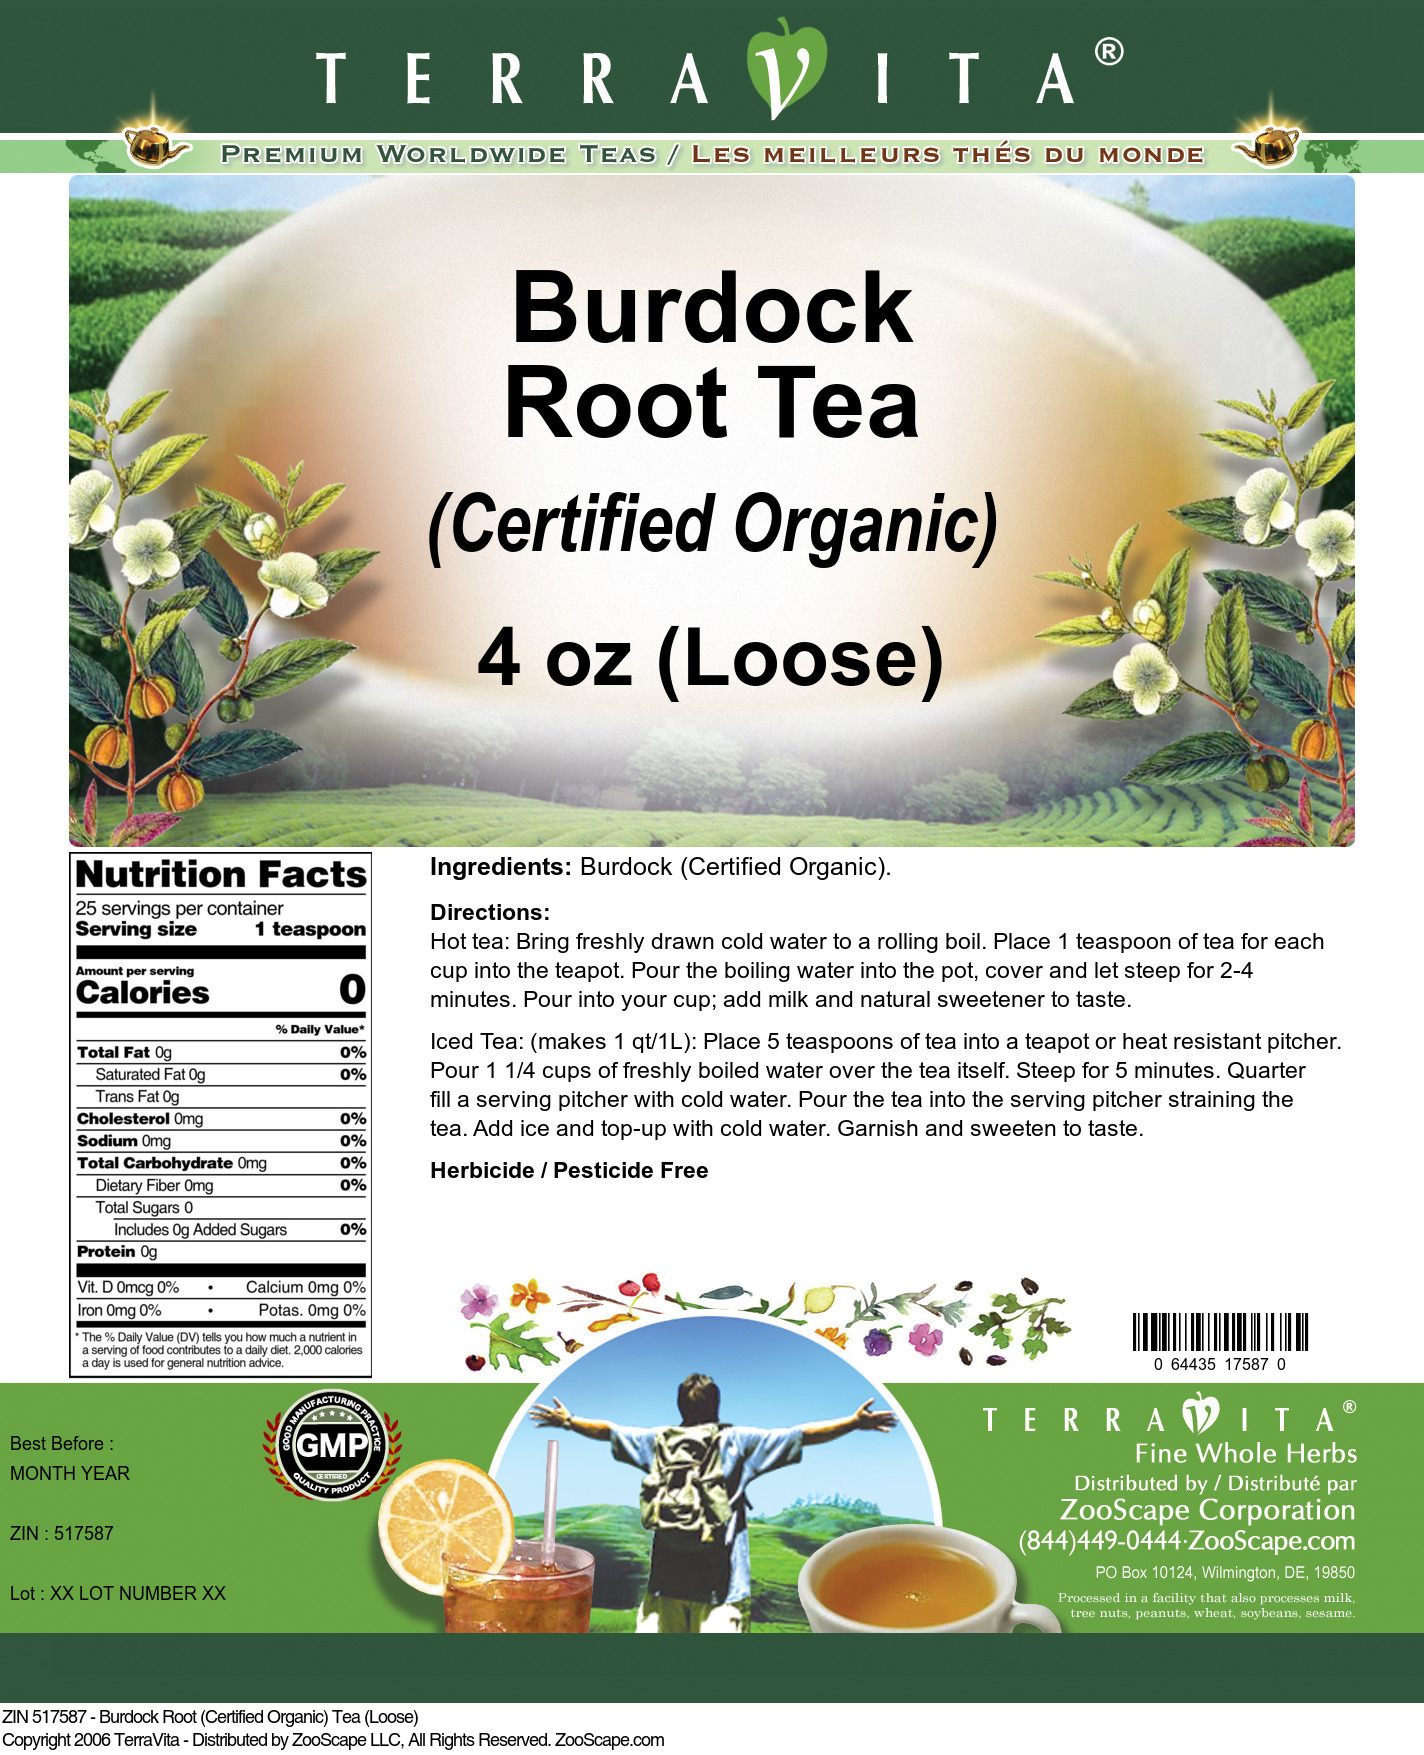 Burdock Root (Certified Organic) Tea (Loose) - Label